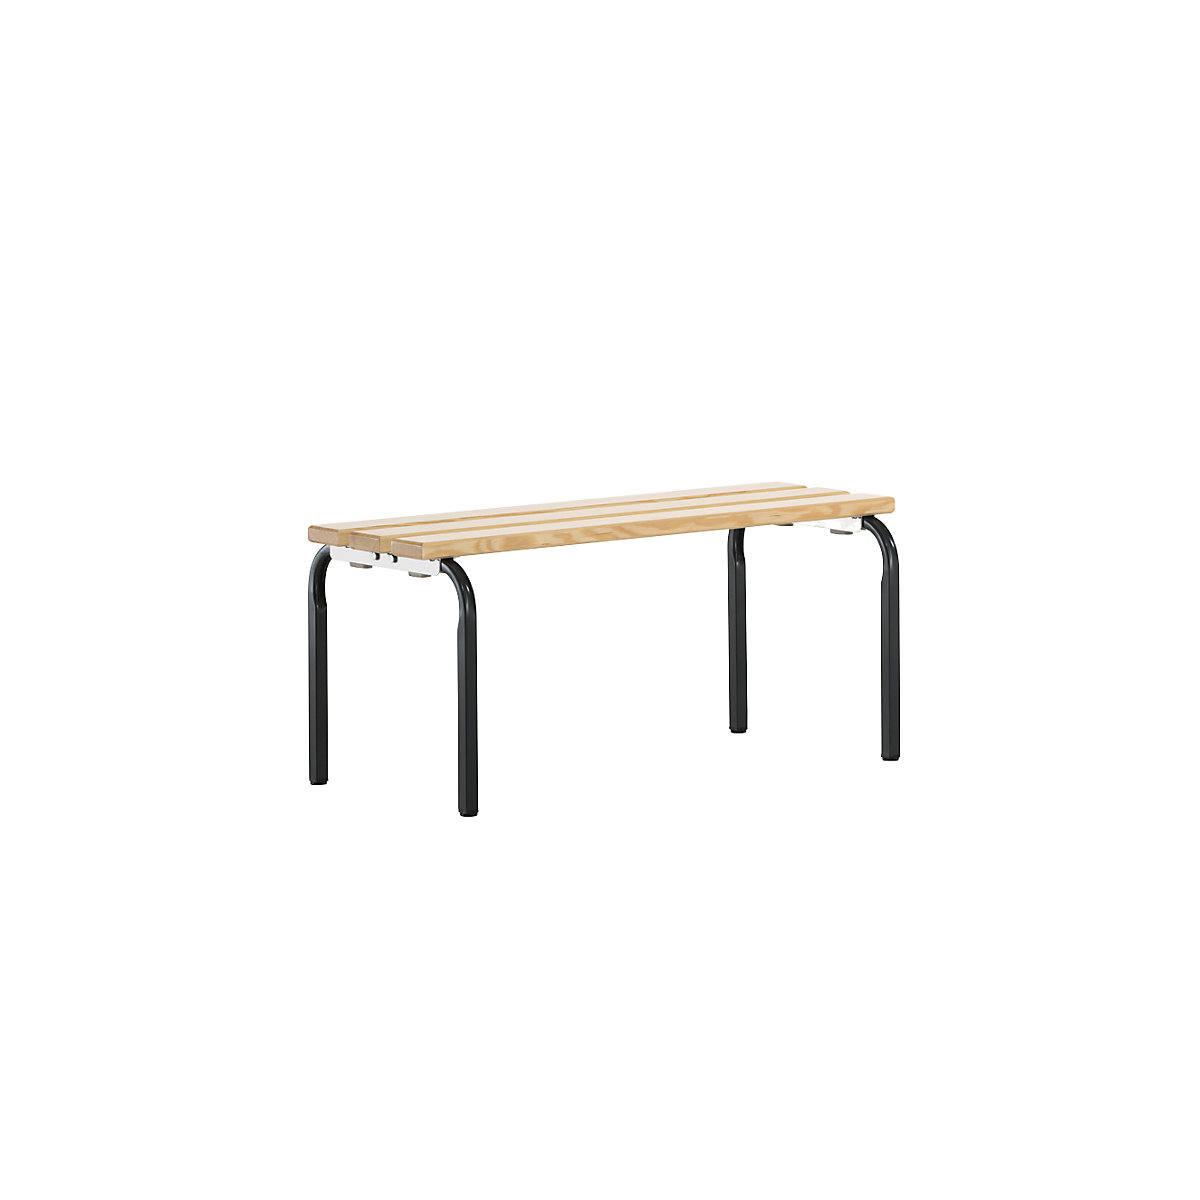 Cloakroom bench, stackable – Sypro, pine wood slats, length 1015 mm, charcoal frame-4